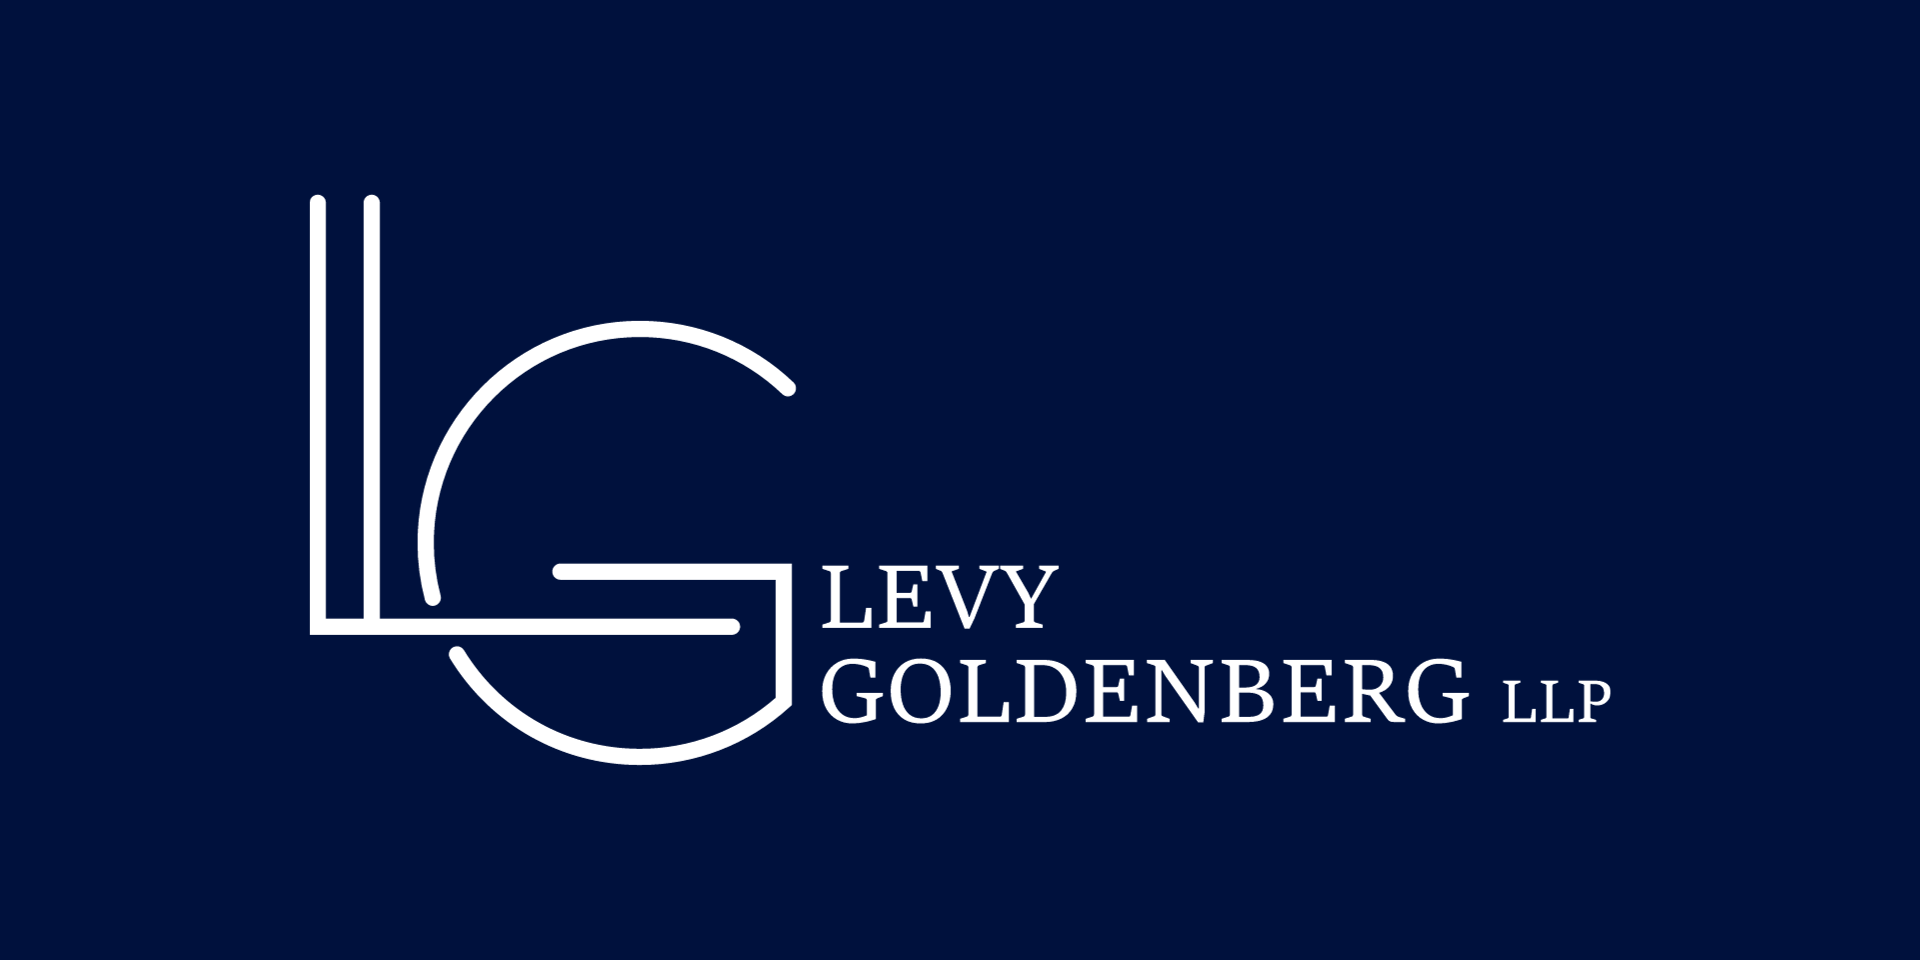 Levy Goldenberg